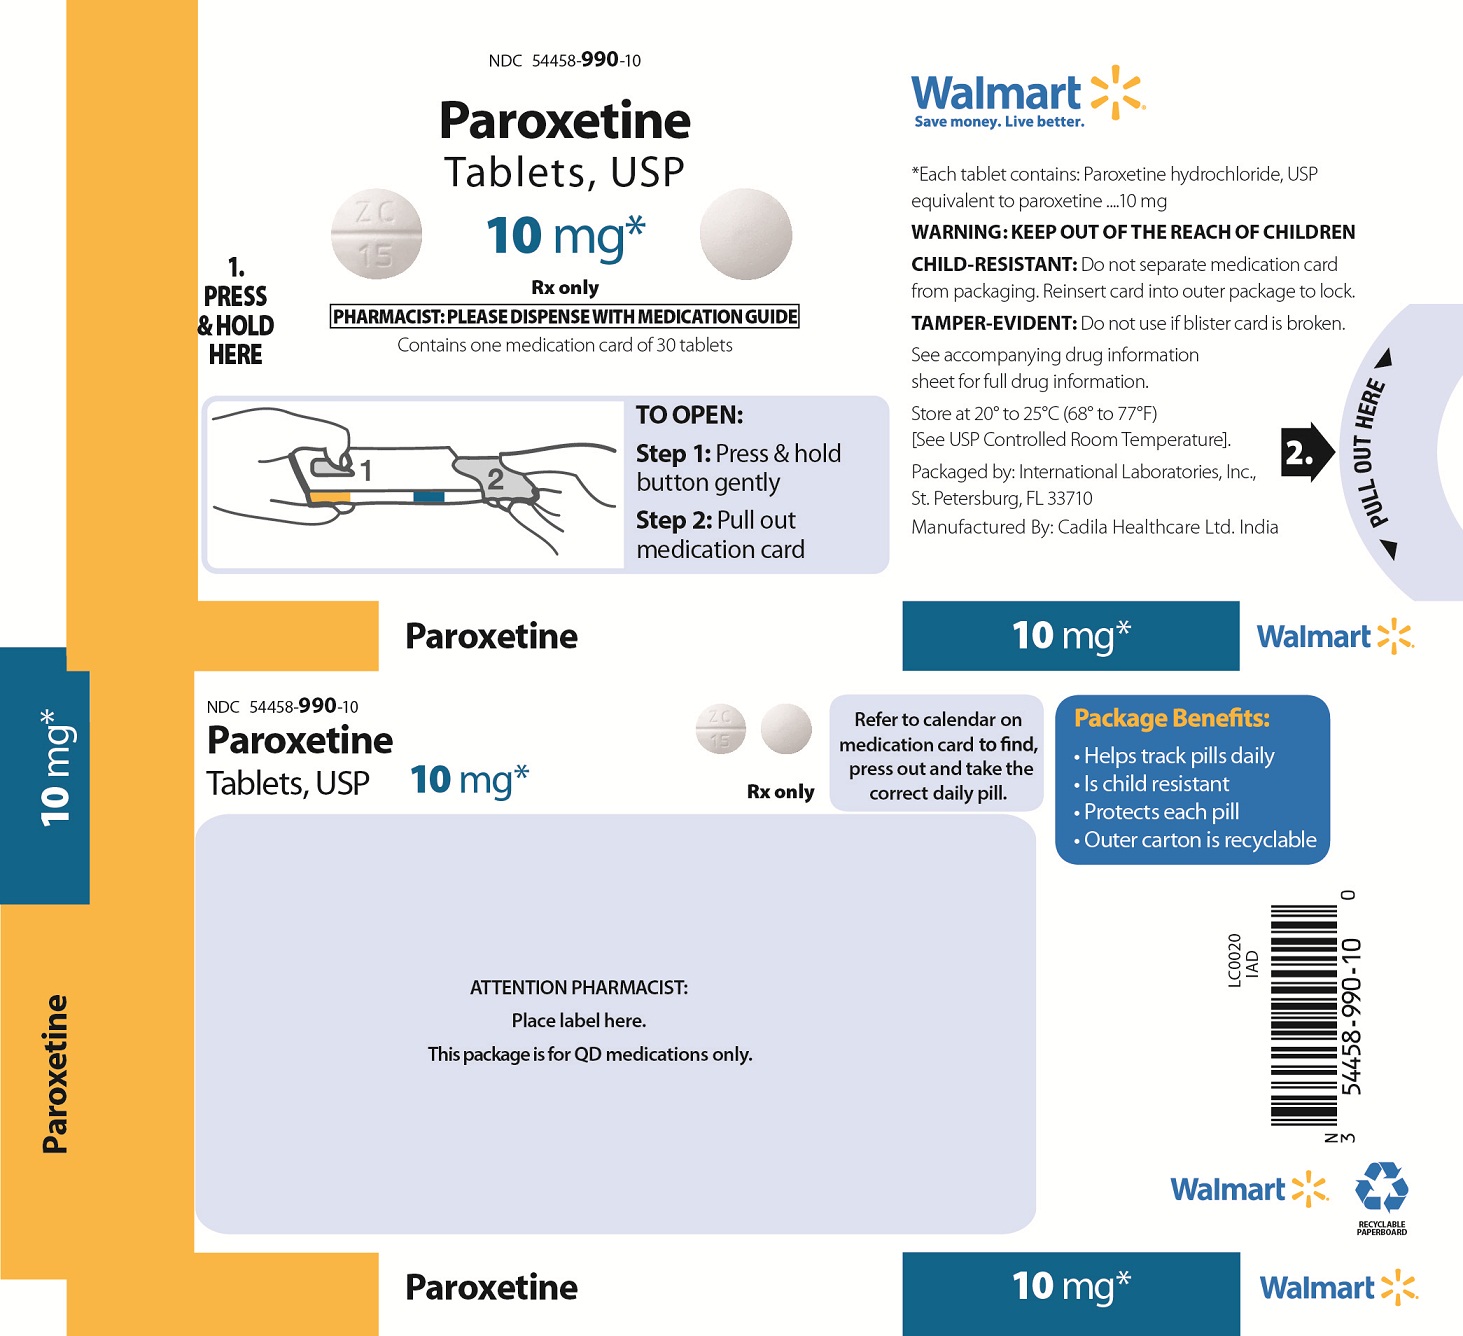 Paroxetine Tablets, USP 10 mg